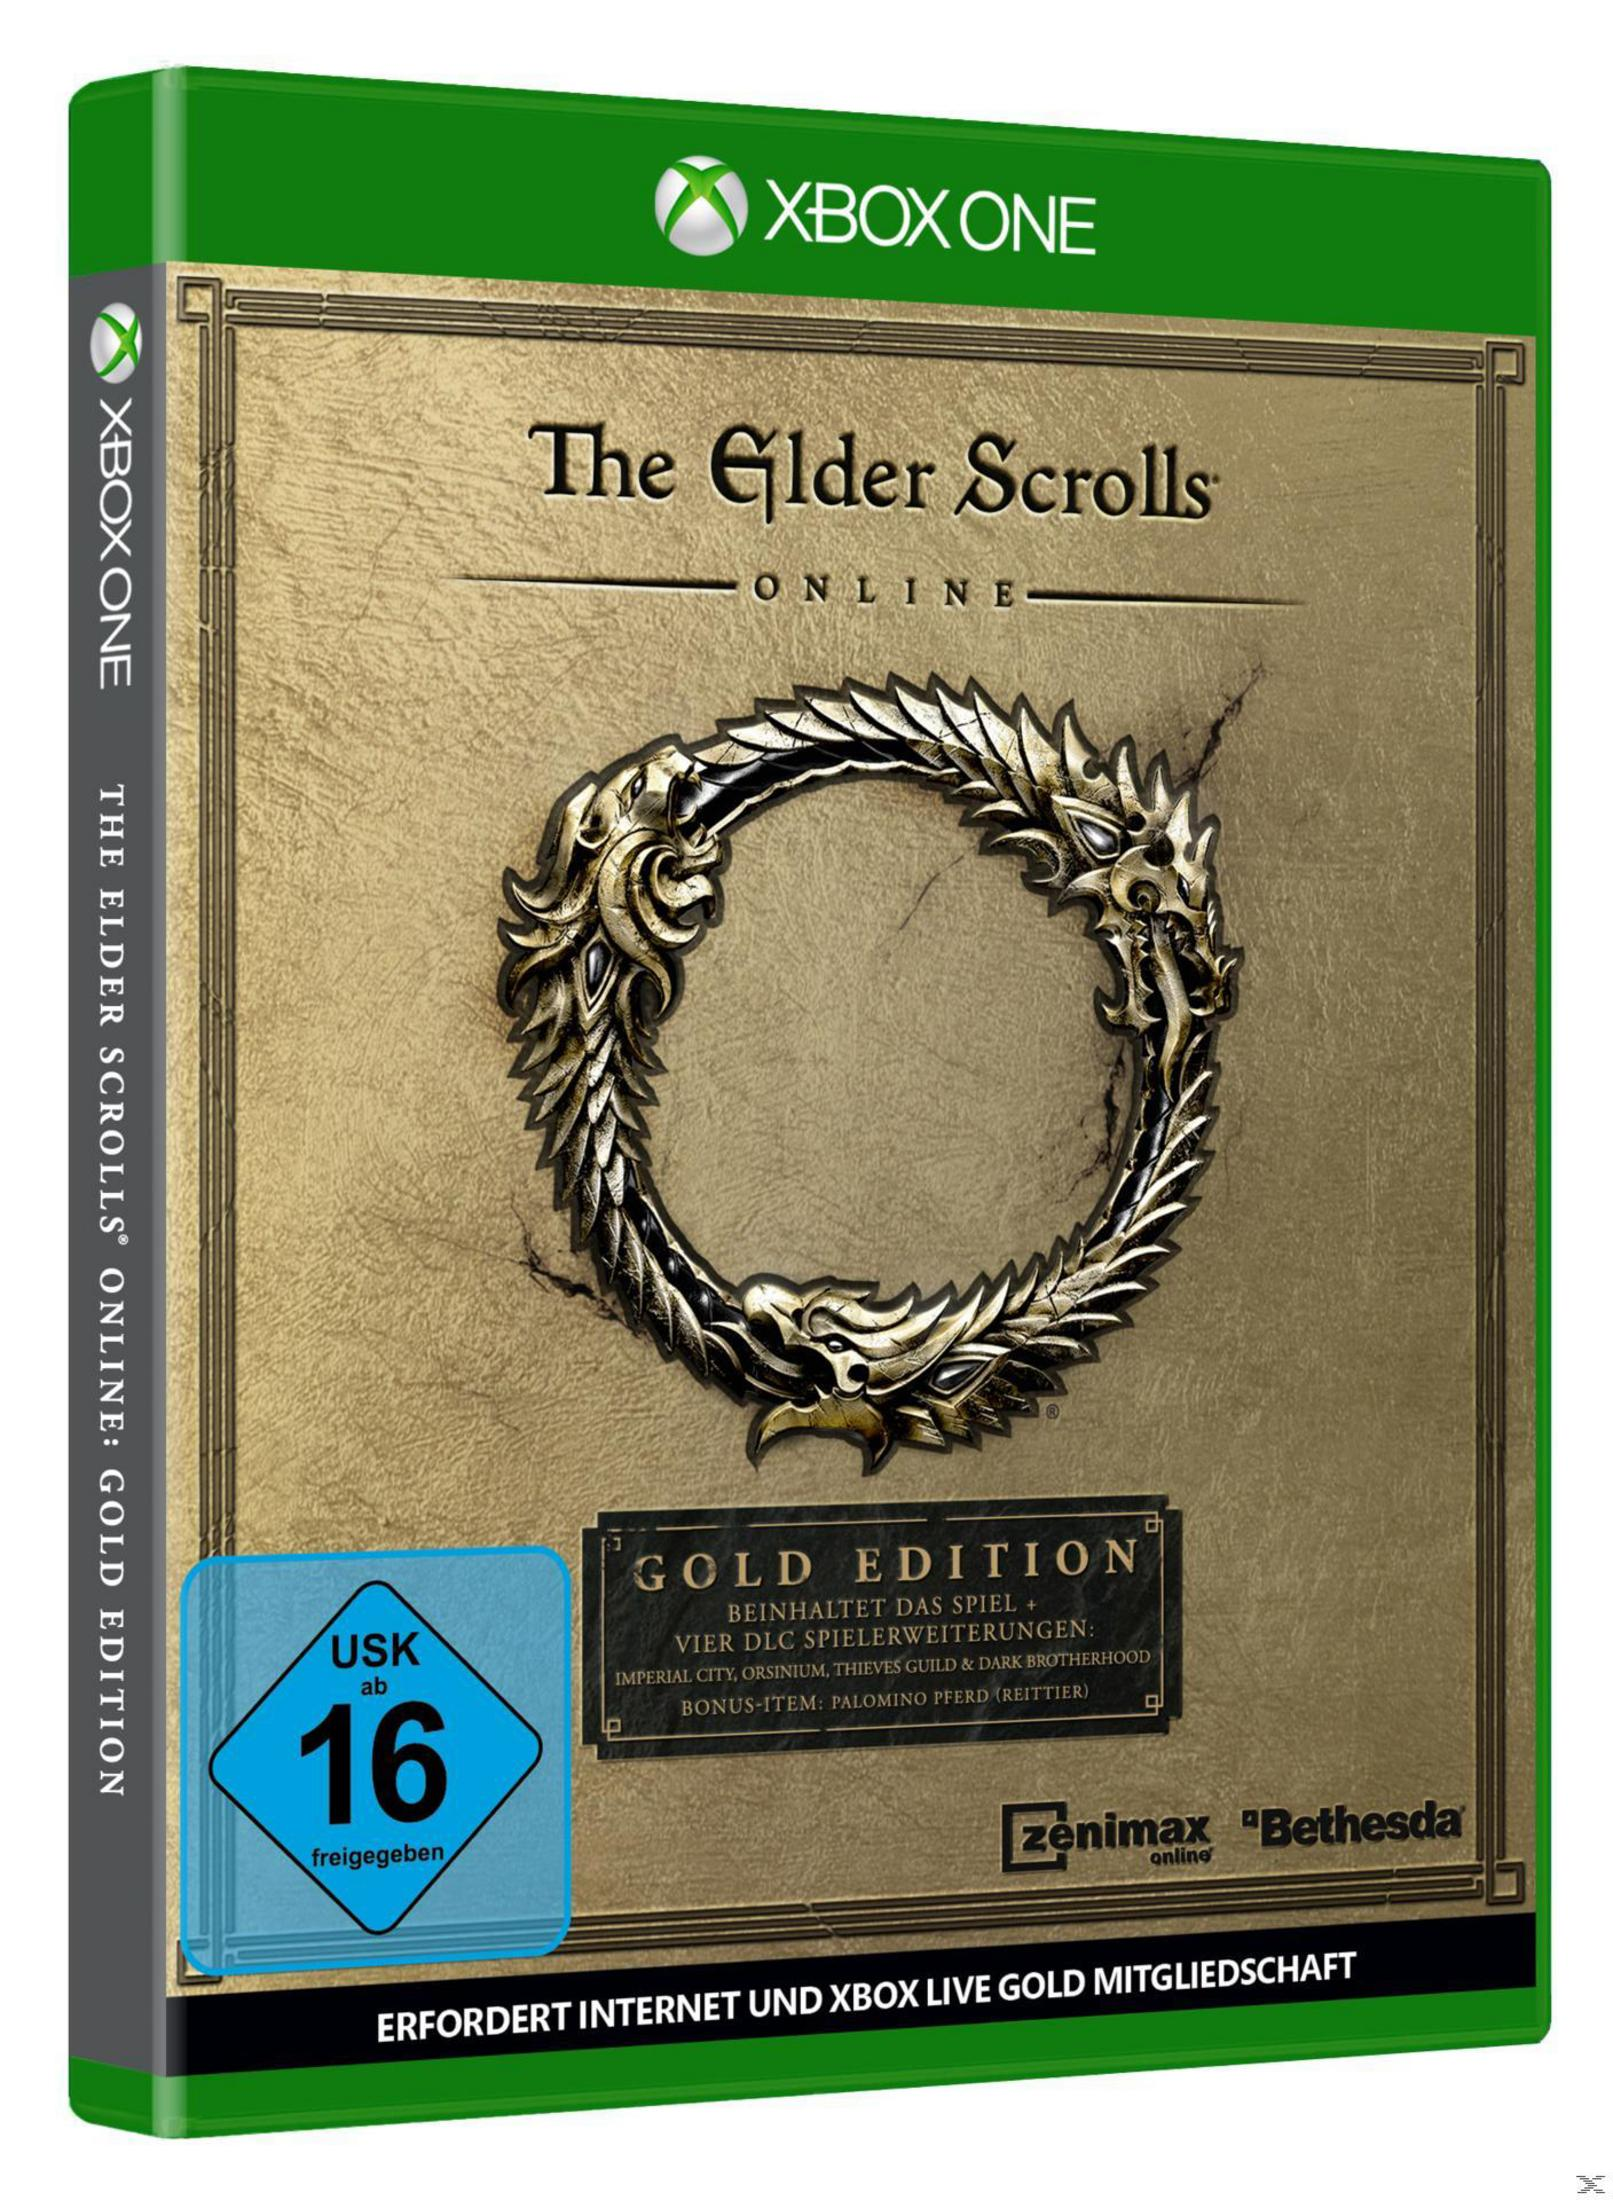 The Elder Scrolls Online Edition - Gold [Xbox One] 